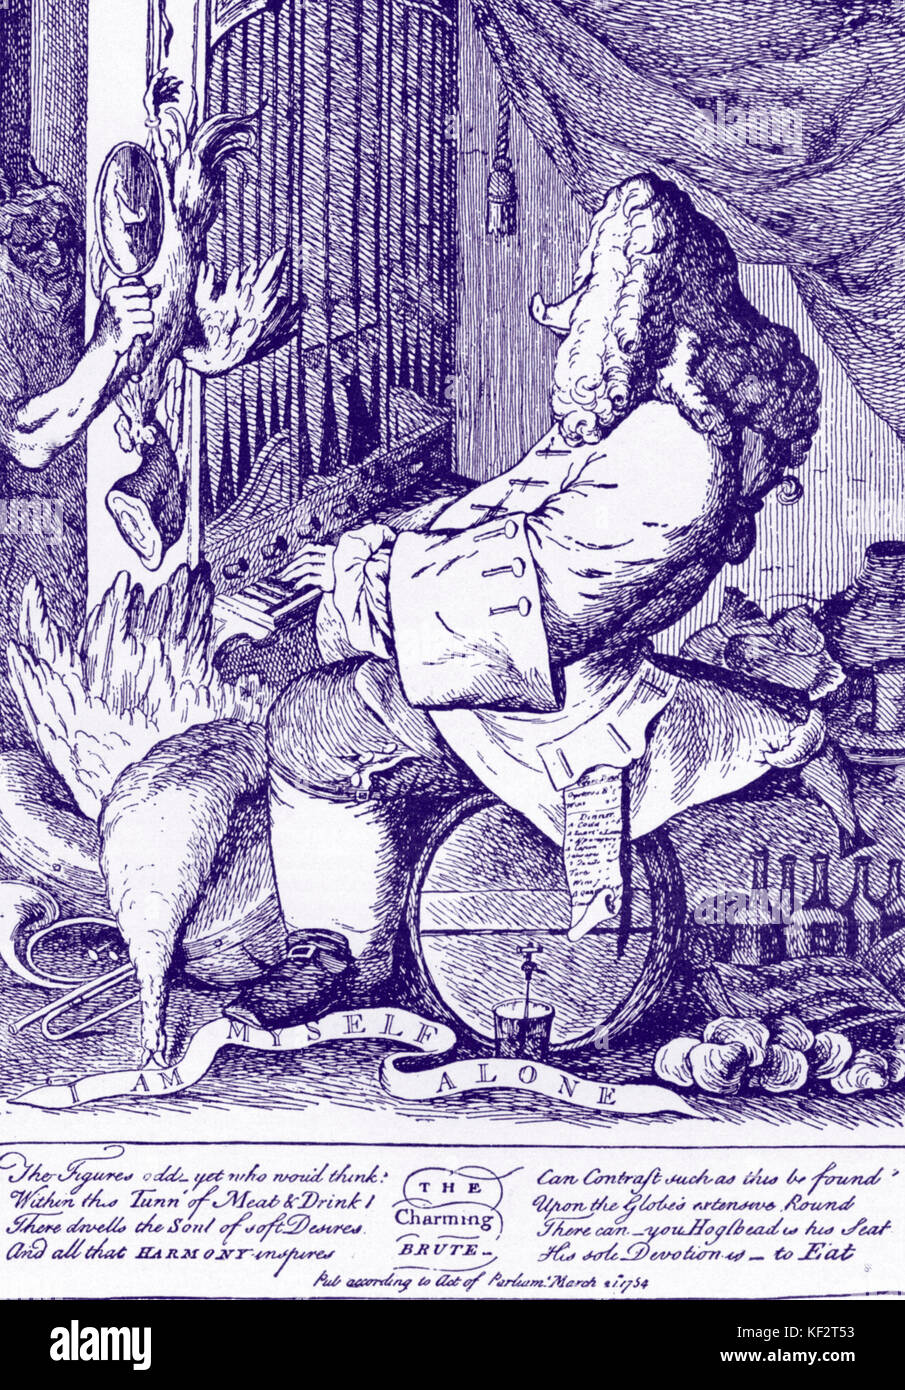 HANDEL, George Frideric. 'L'affascinante Brute'. Compositore tedesco-inglese, 1685-1759. Handel caricatura da Goupy, 1754. Foto Stock